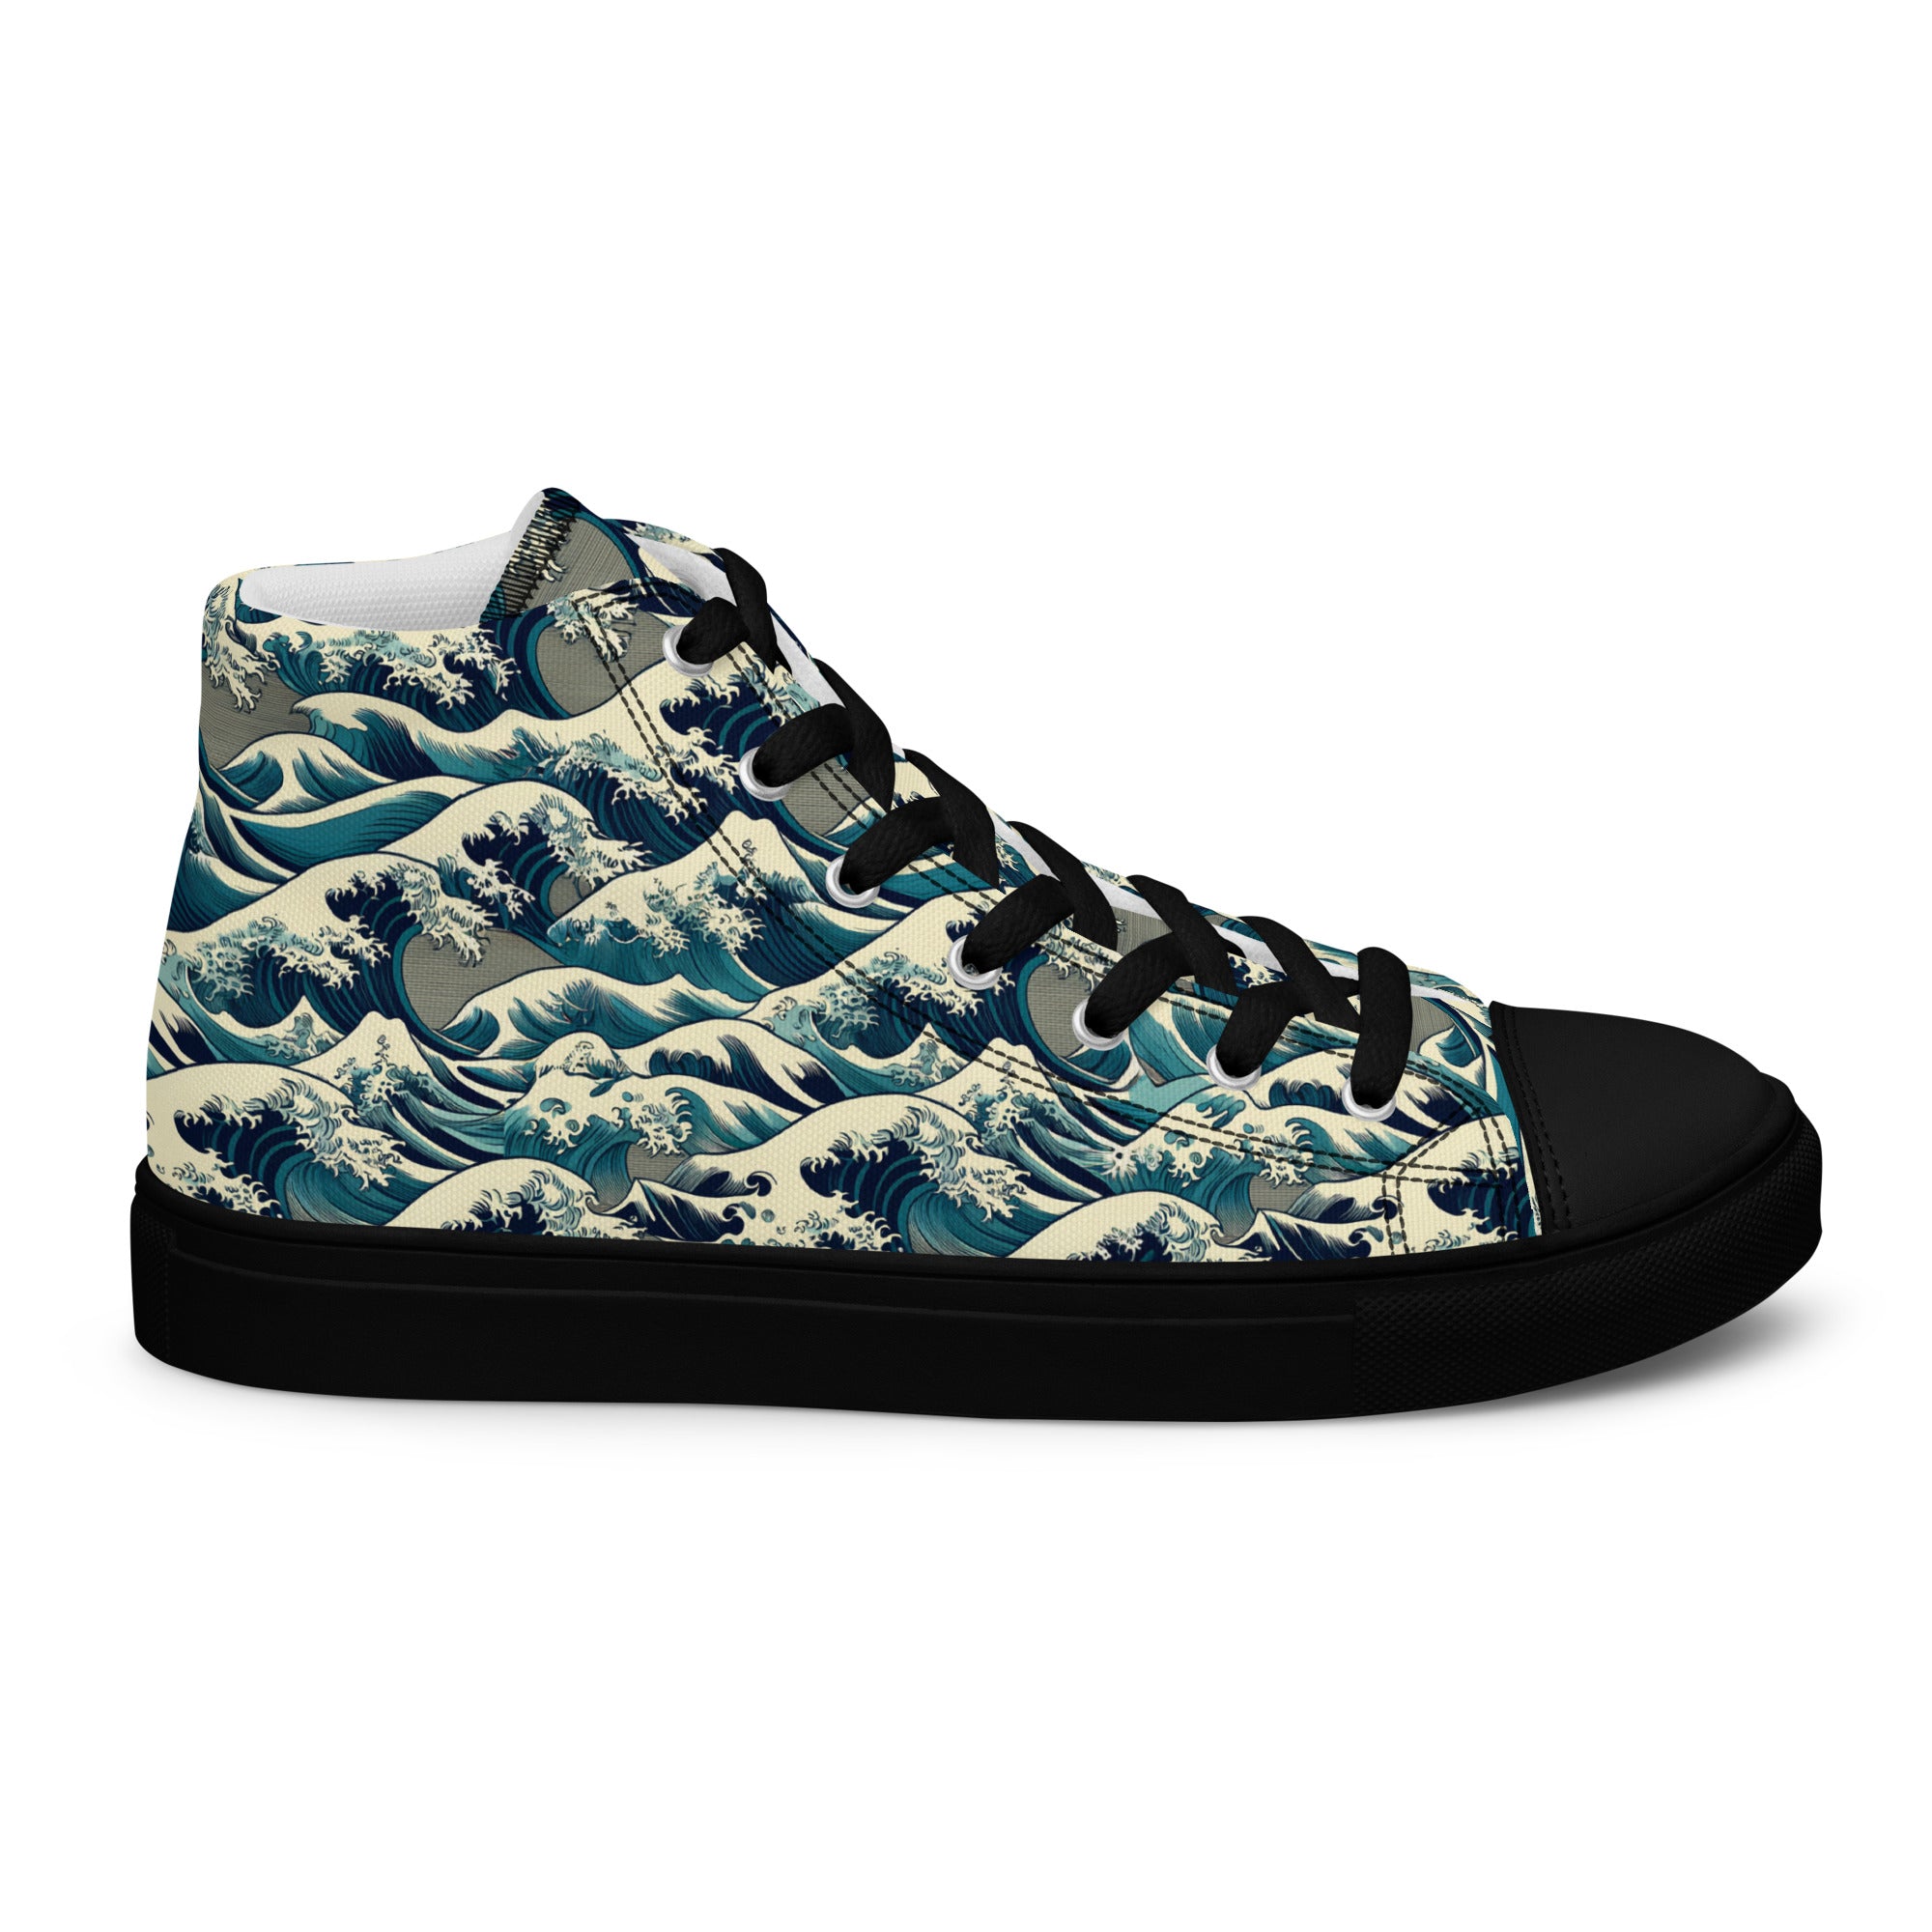 Hokusai 'The Great Wave off Kanagawa' High Top Shoes | Premium Art High Top Sneakers for Men